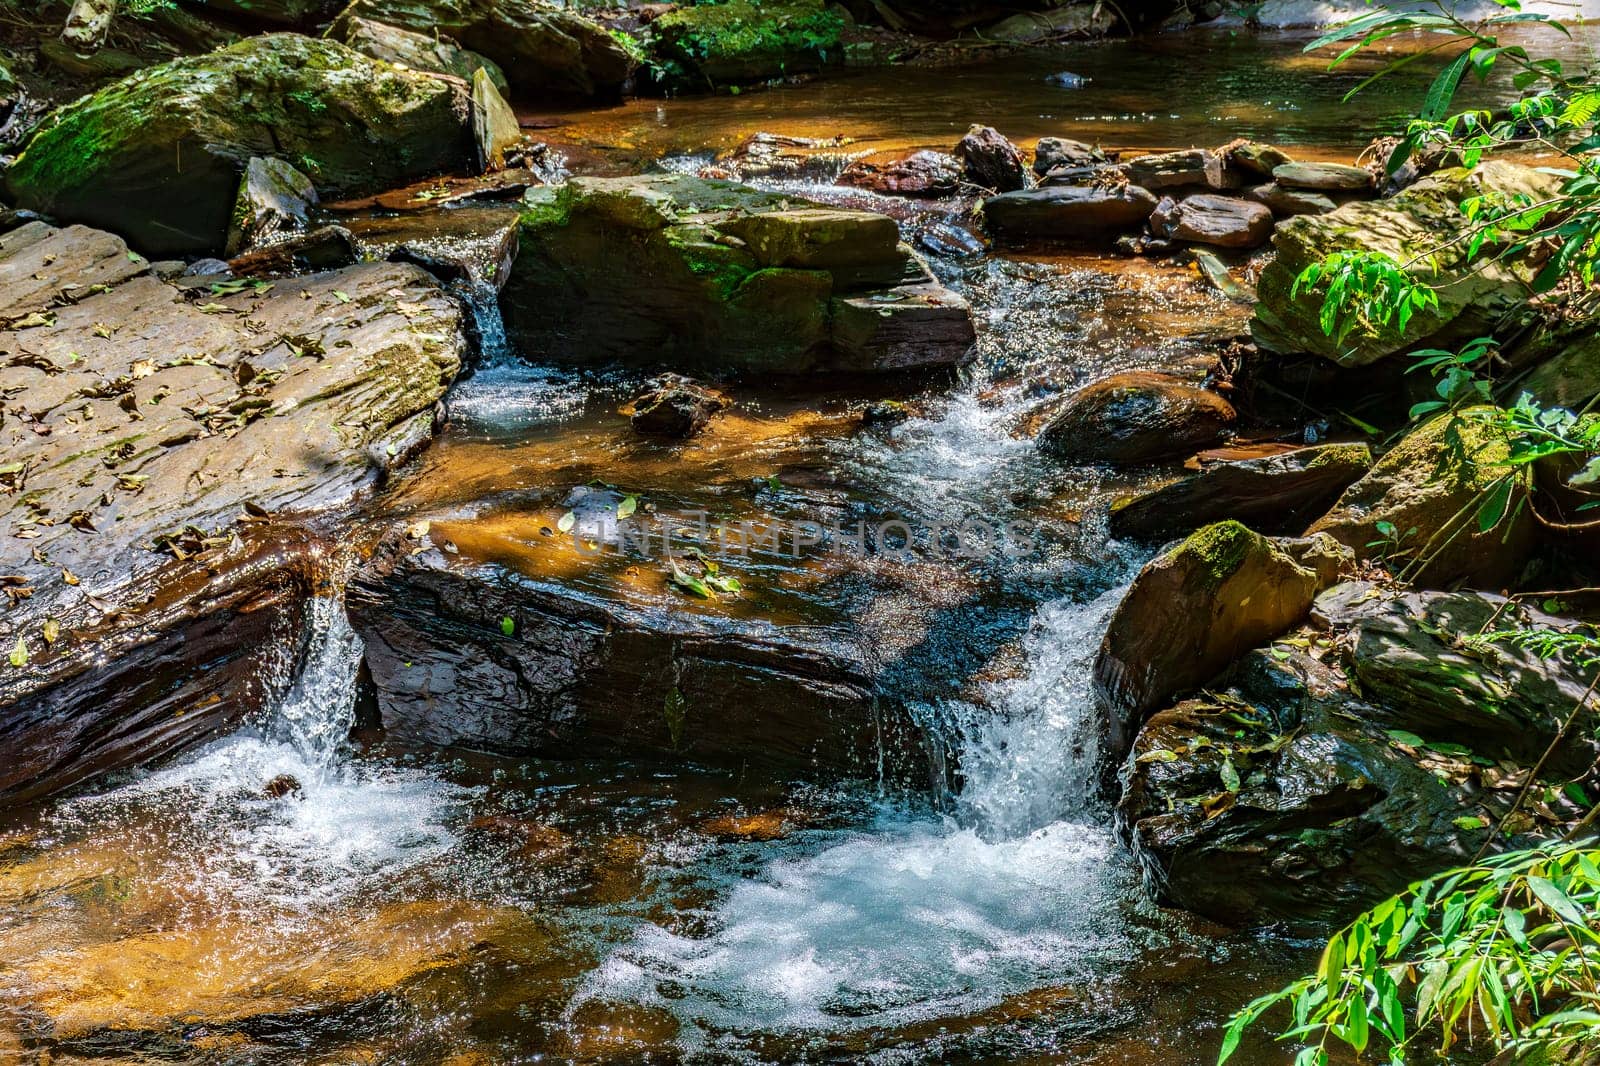 River water running through rocks by Fred_Pinheiro